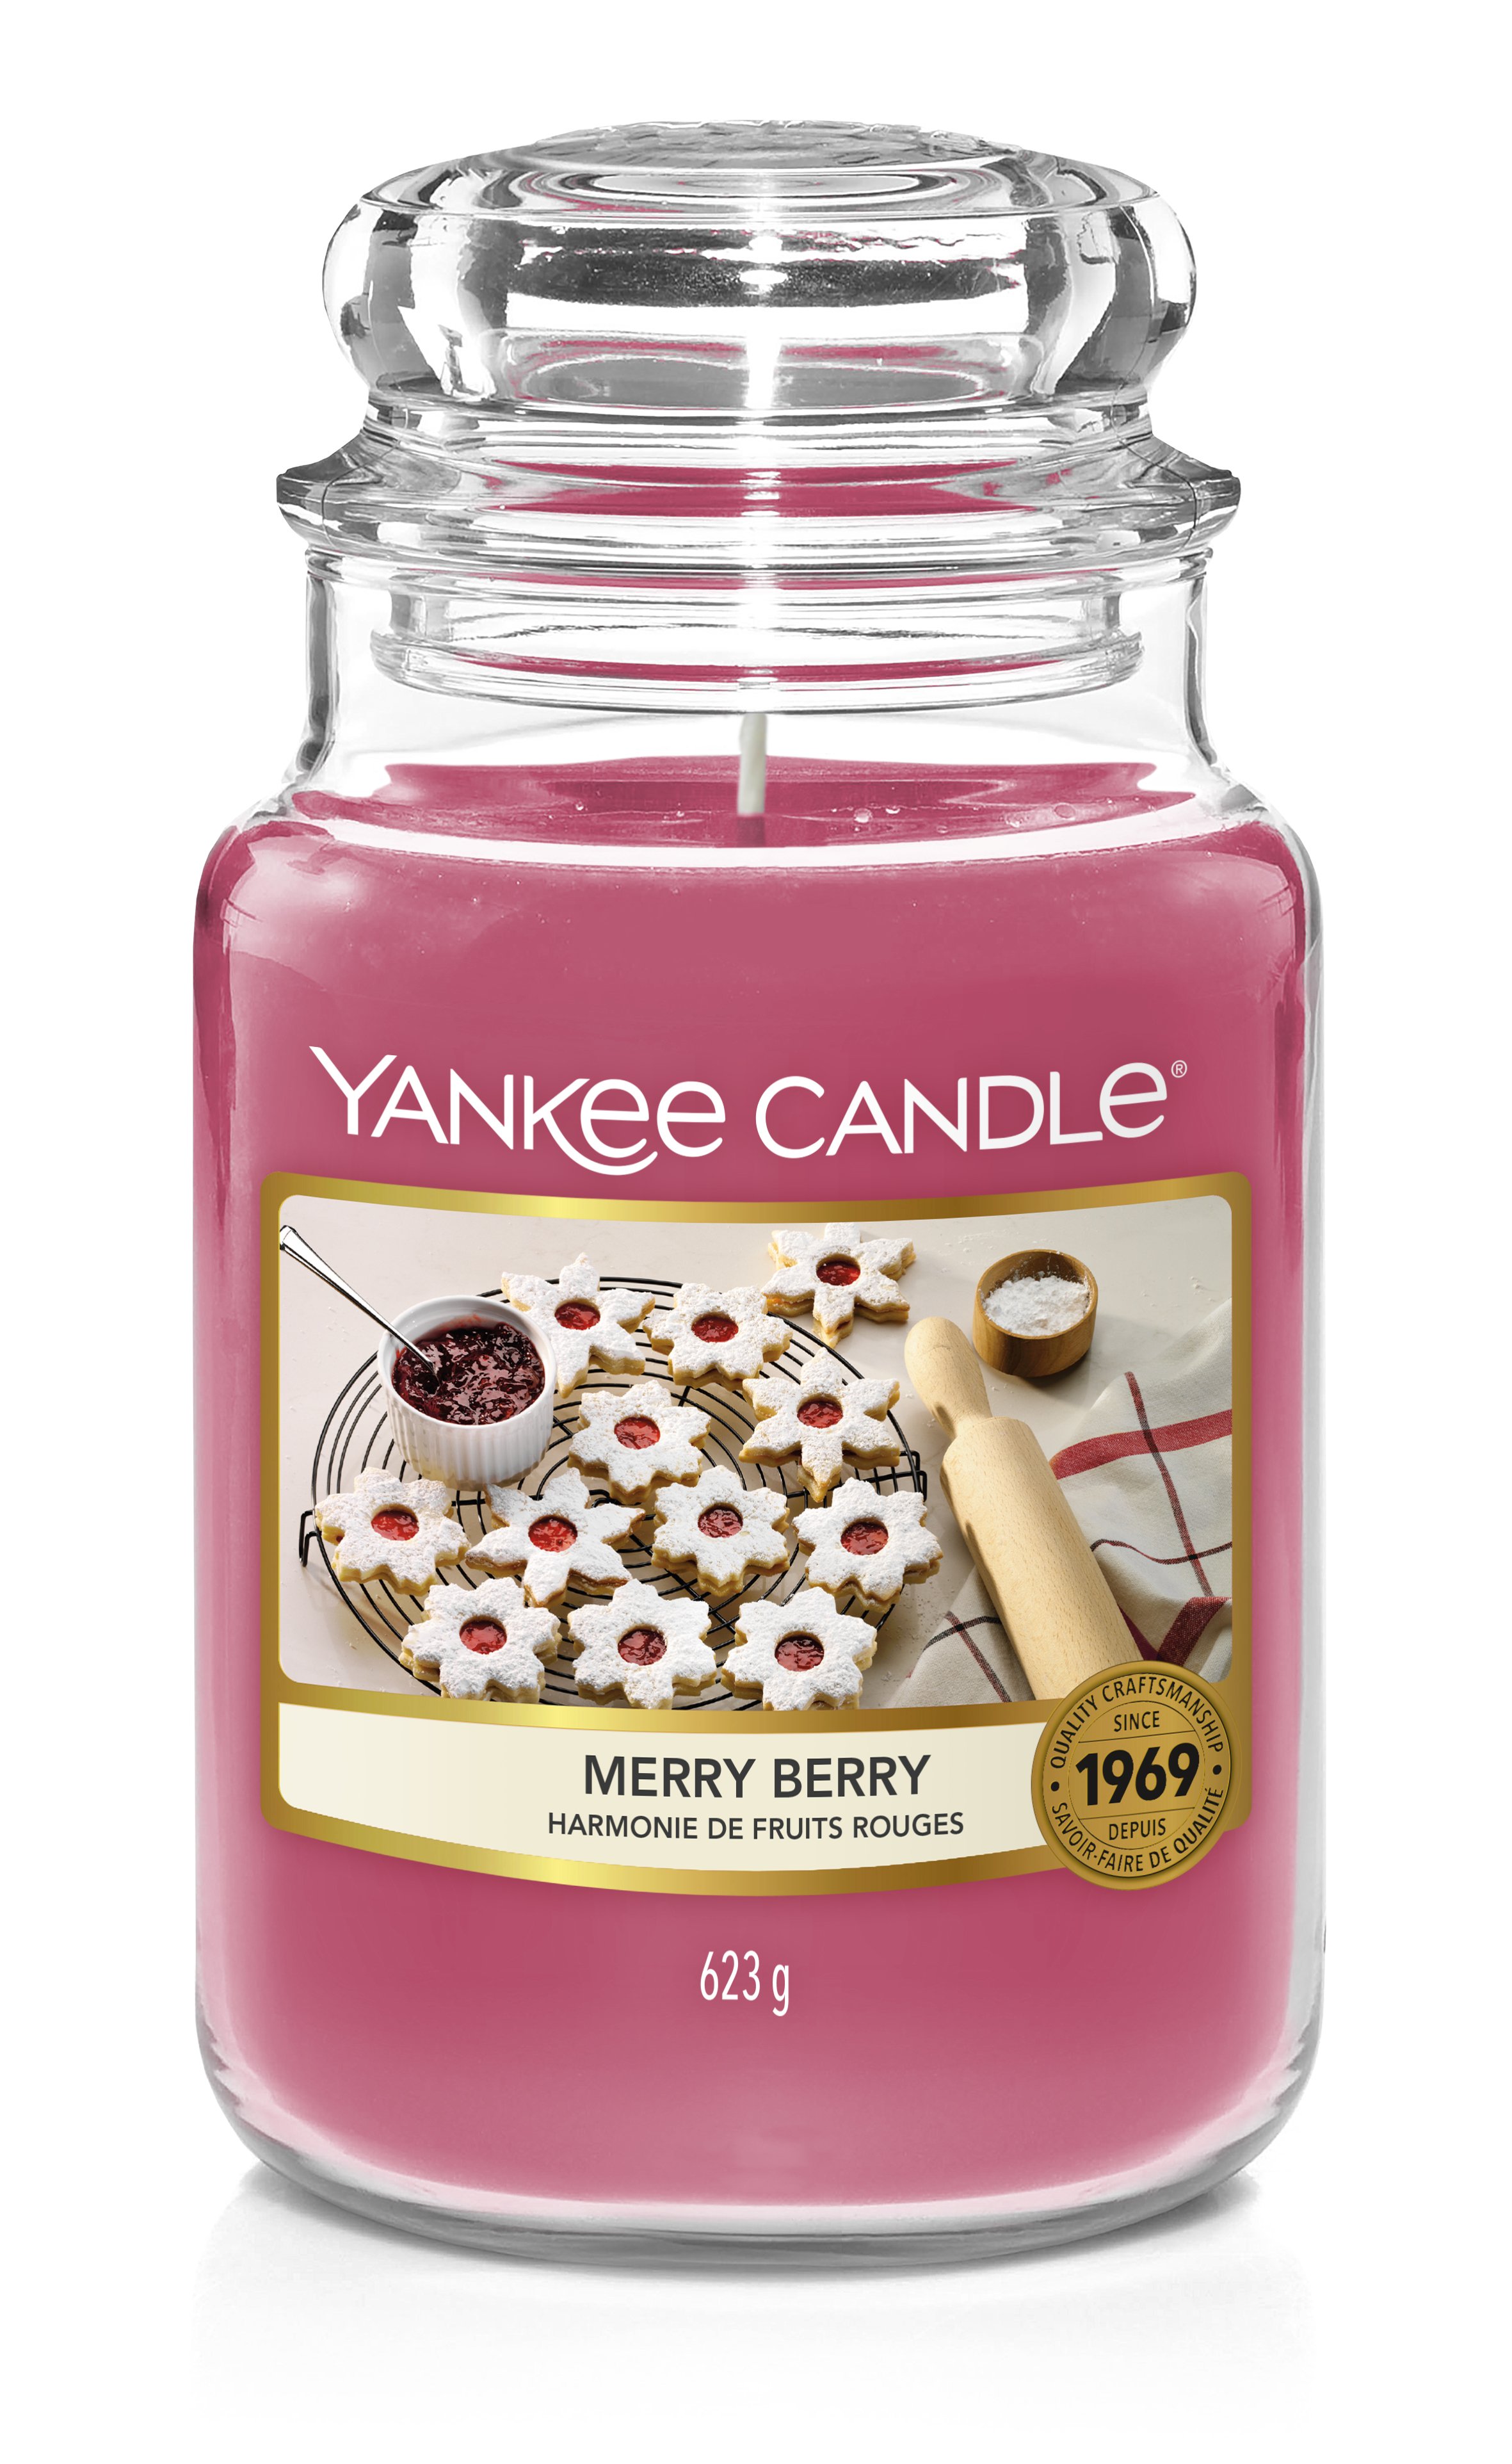 Yankee Candle Original Large Jar Merry Berry